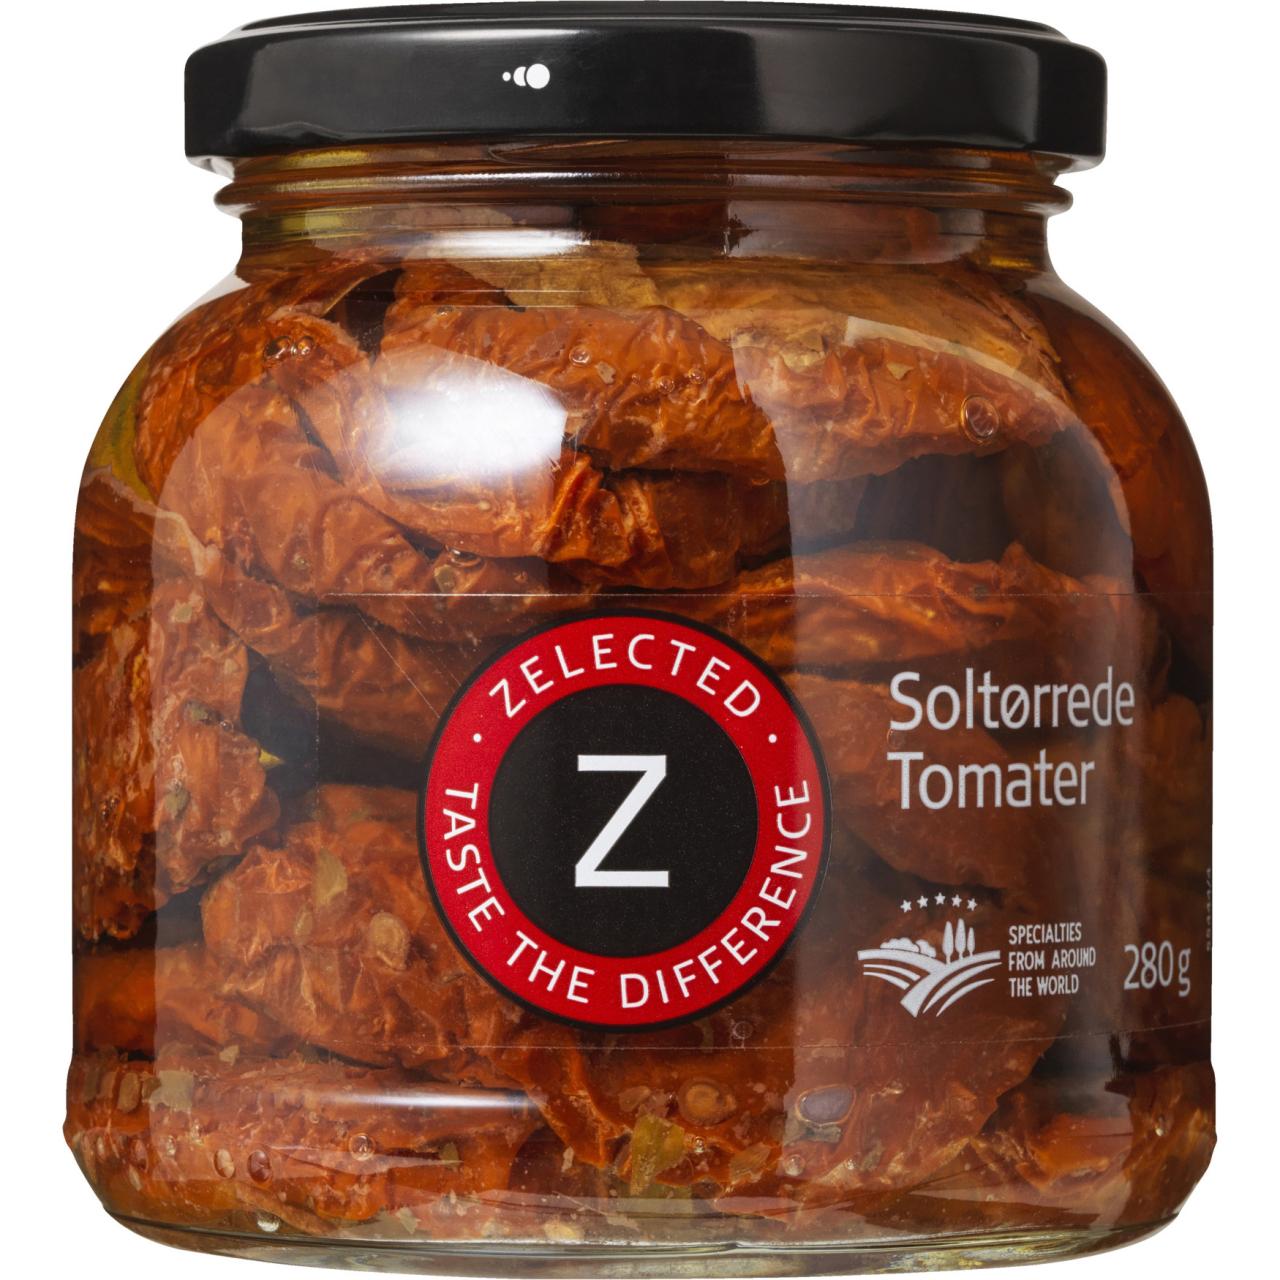 Z Soltørrede Tomater I Solsikkeolie/Getrocknete Tomaten in Sonnenblumenöl 280g